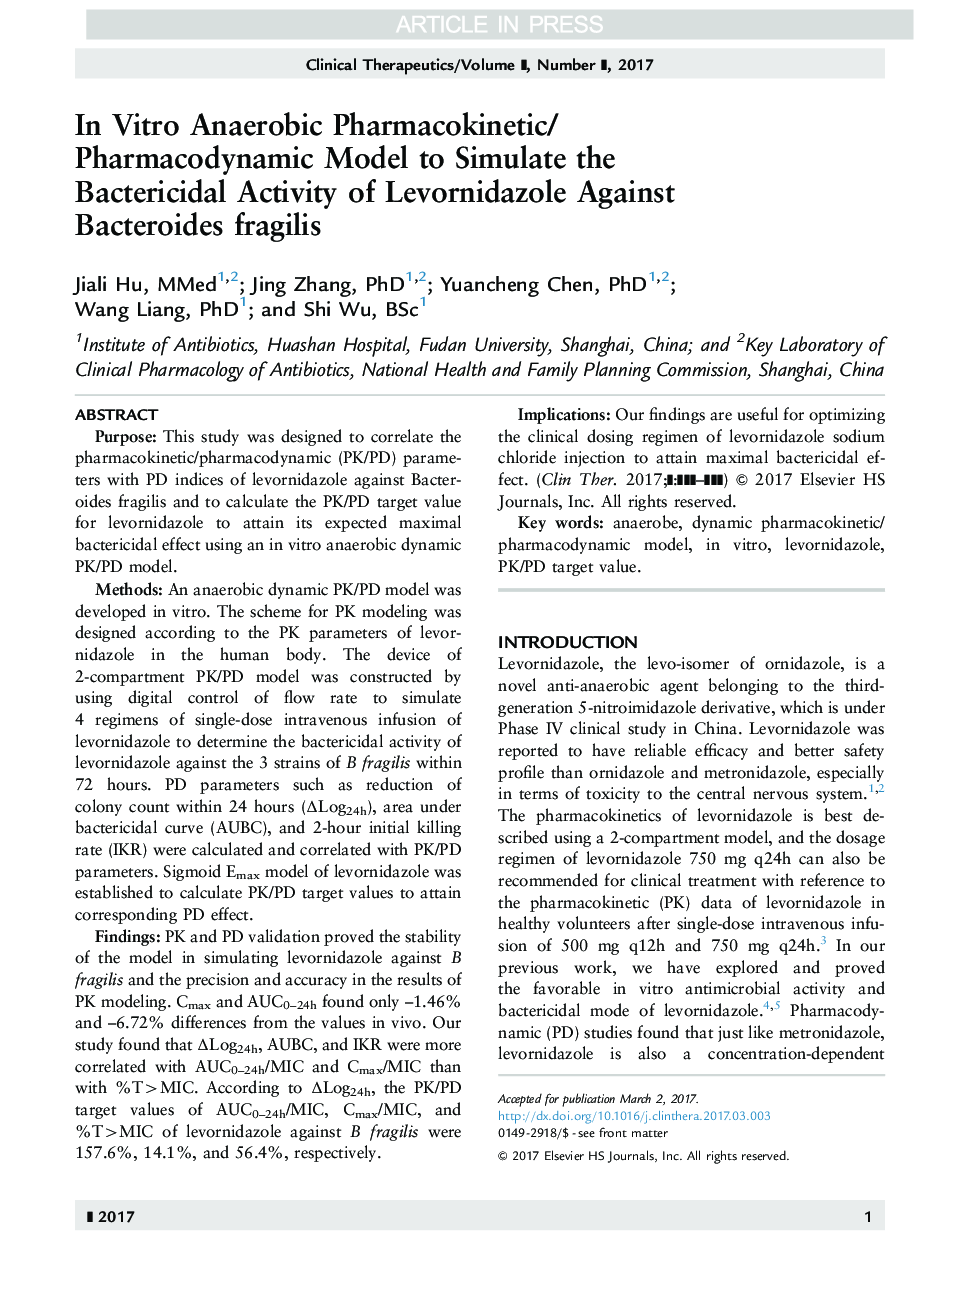 In Vitro Anaerobic Pharmacokinetic/Pharmacodynamic Model to Simulate the Bactericidal Activity of Levornidazole Against Bacteroides fragilis